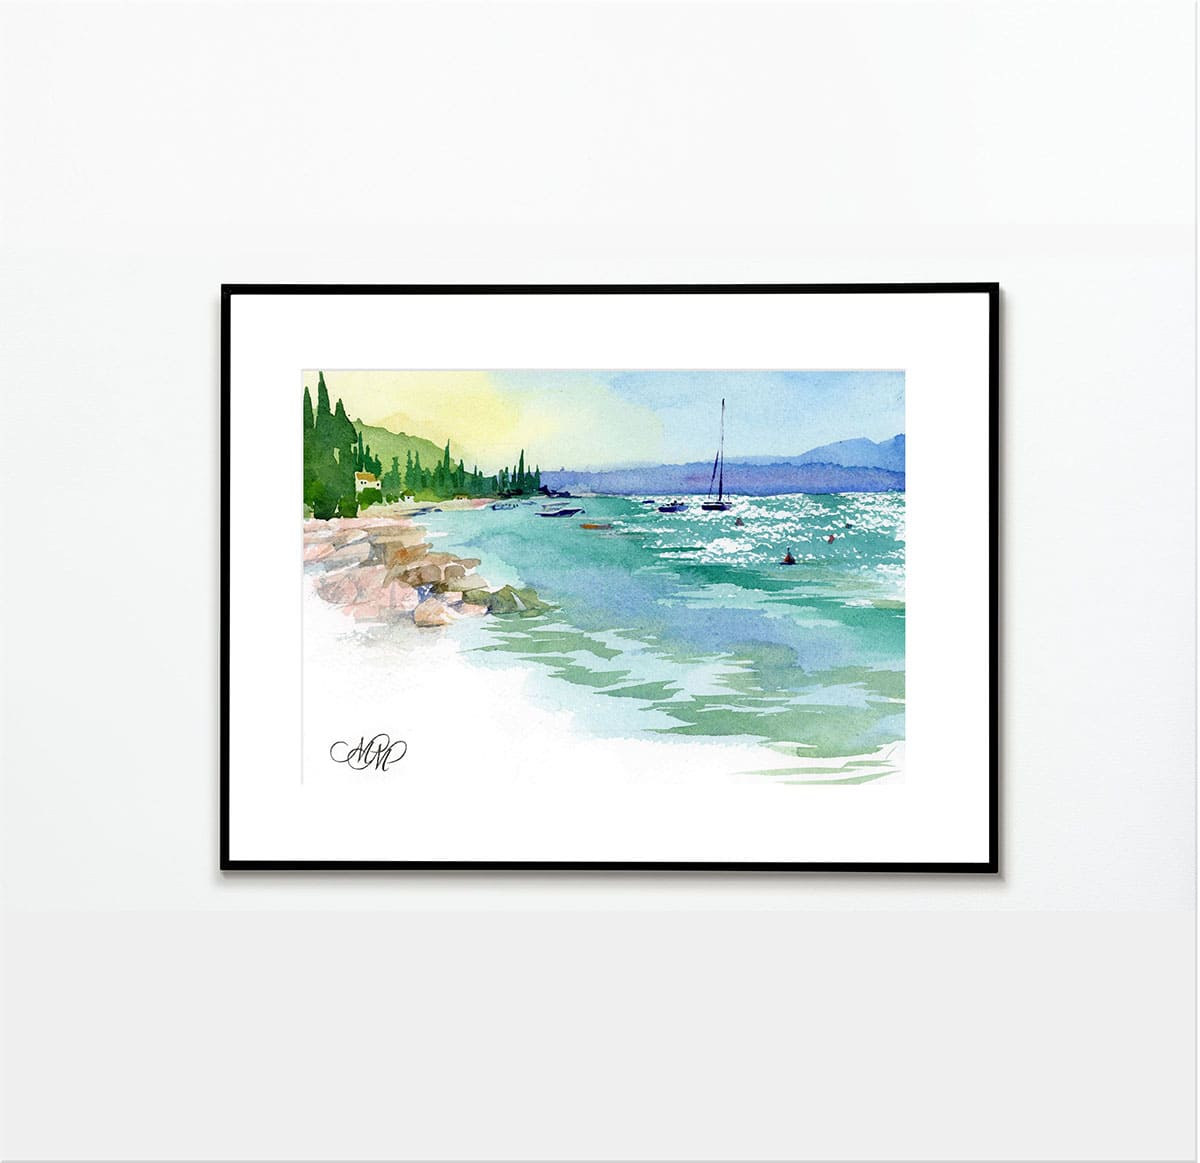 Summer Lake Garda. Framed watercolor sketch